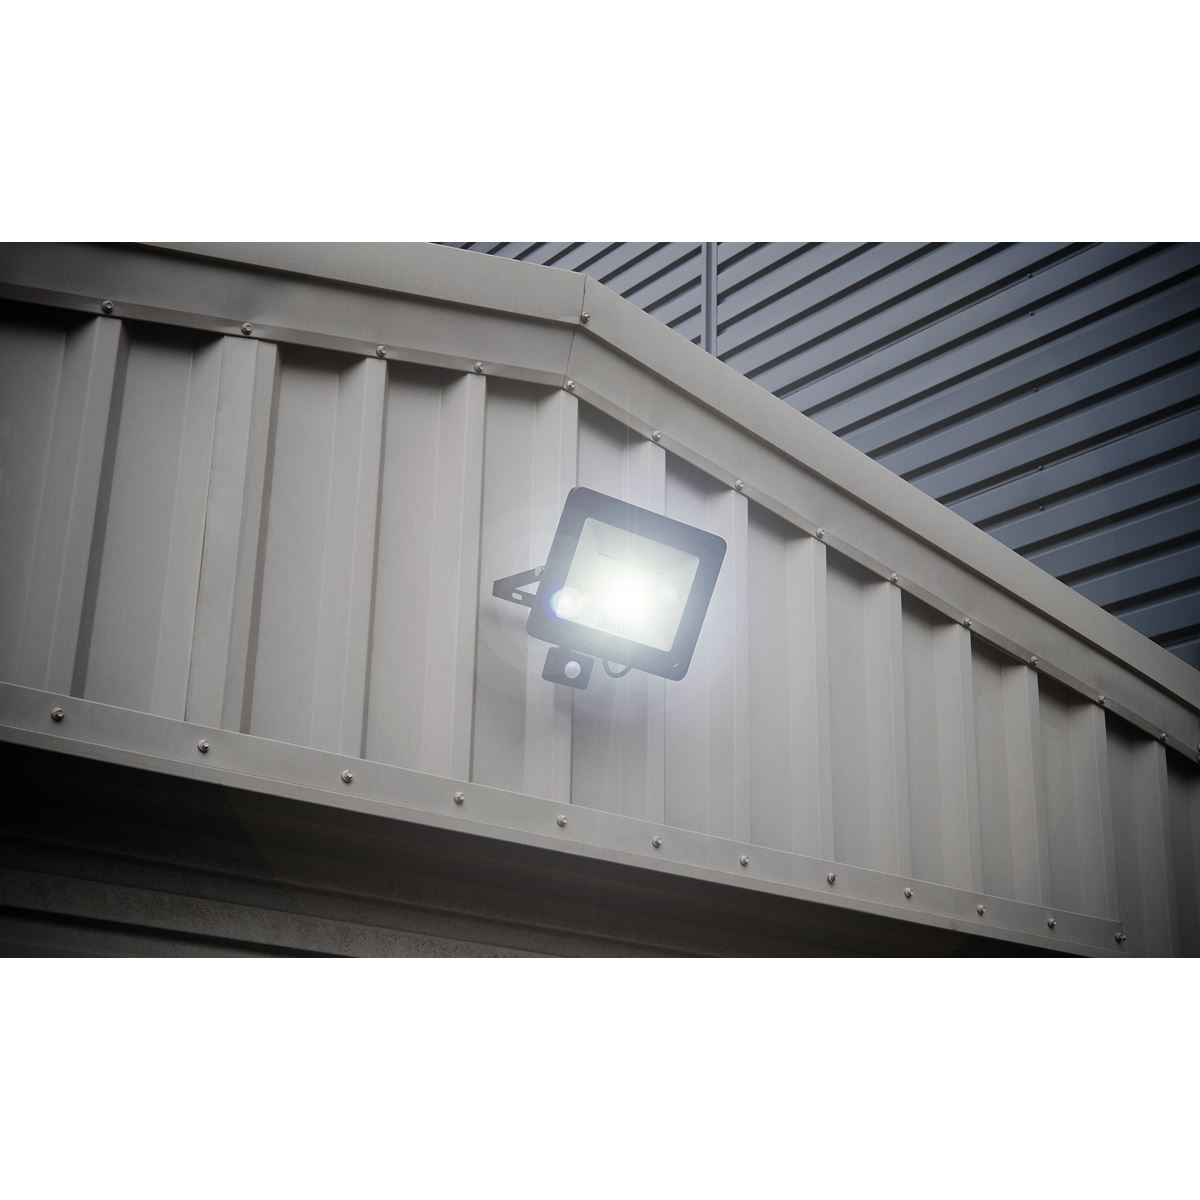 Sealey Extra-Slim Floodlight with PIR Sensor 100W SMD LED